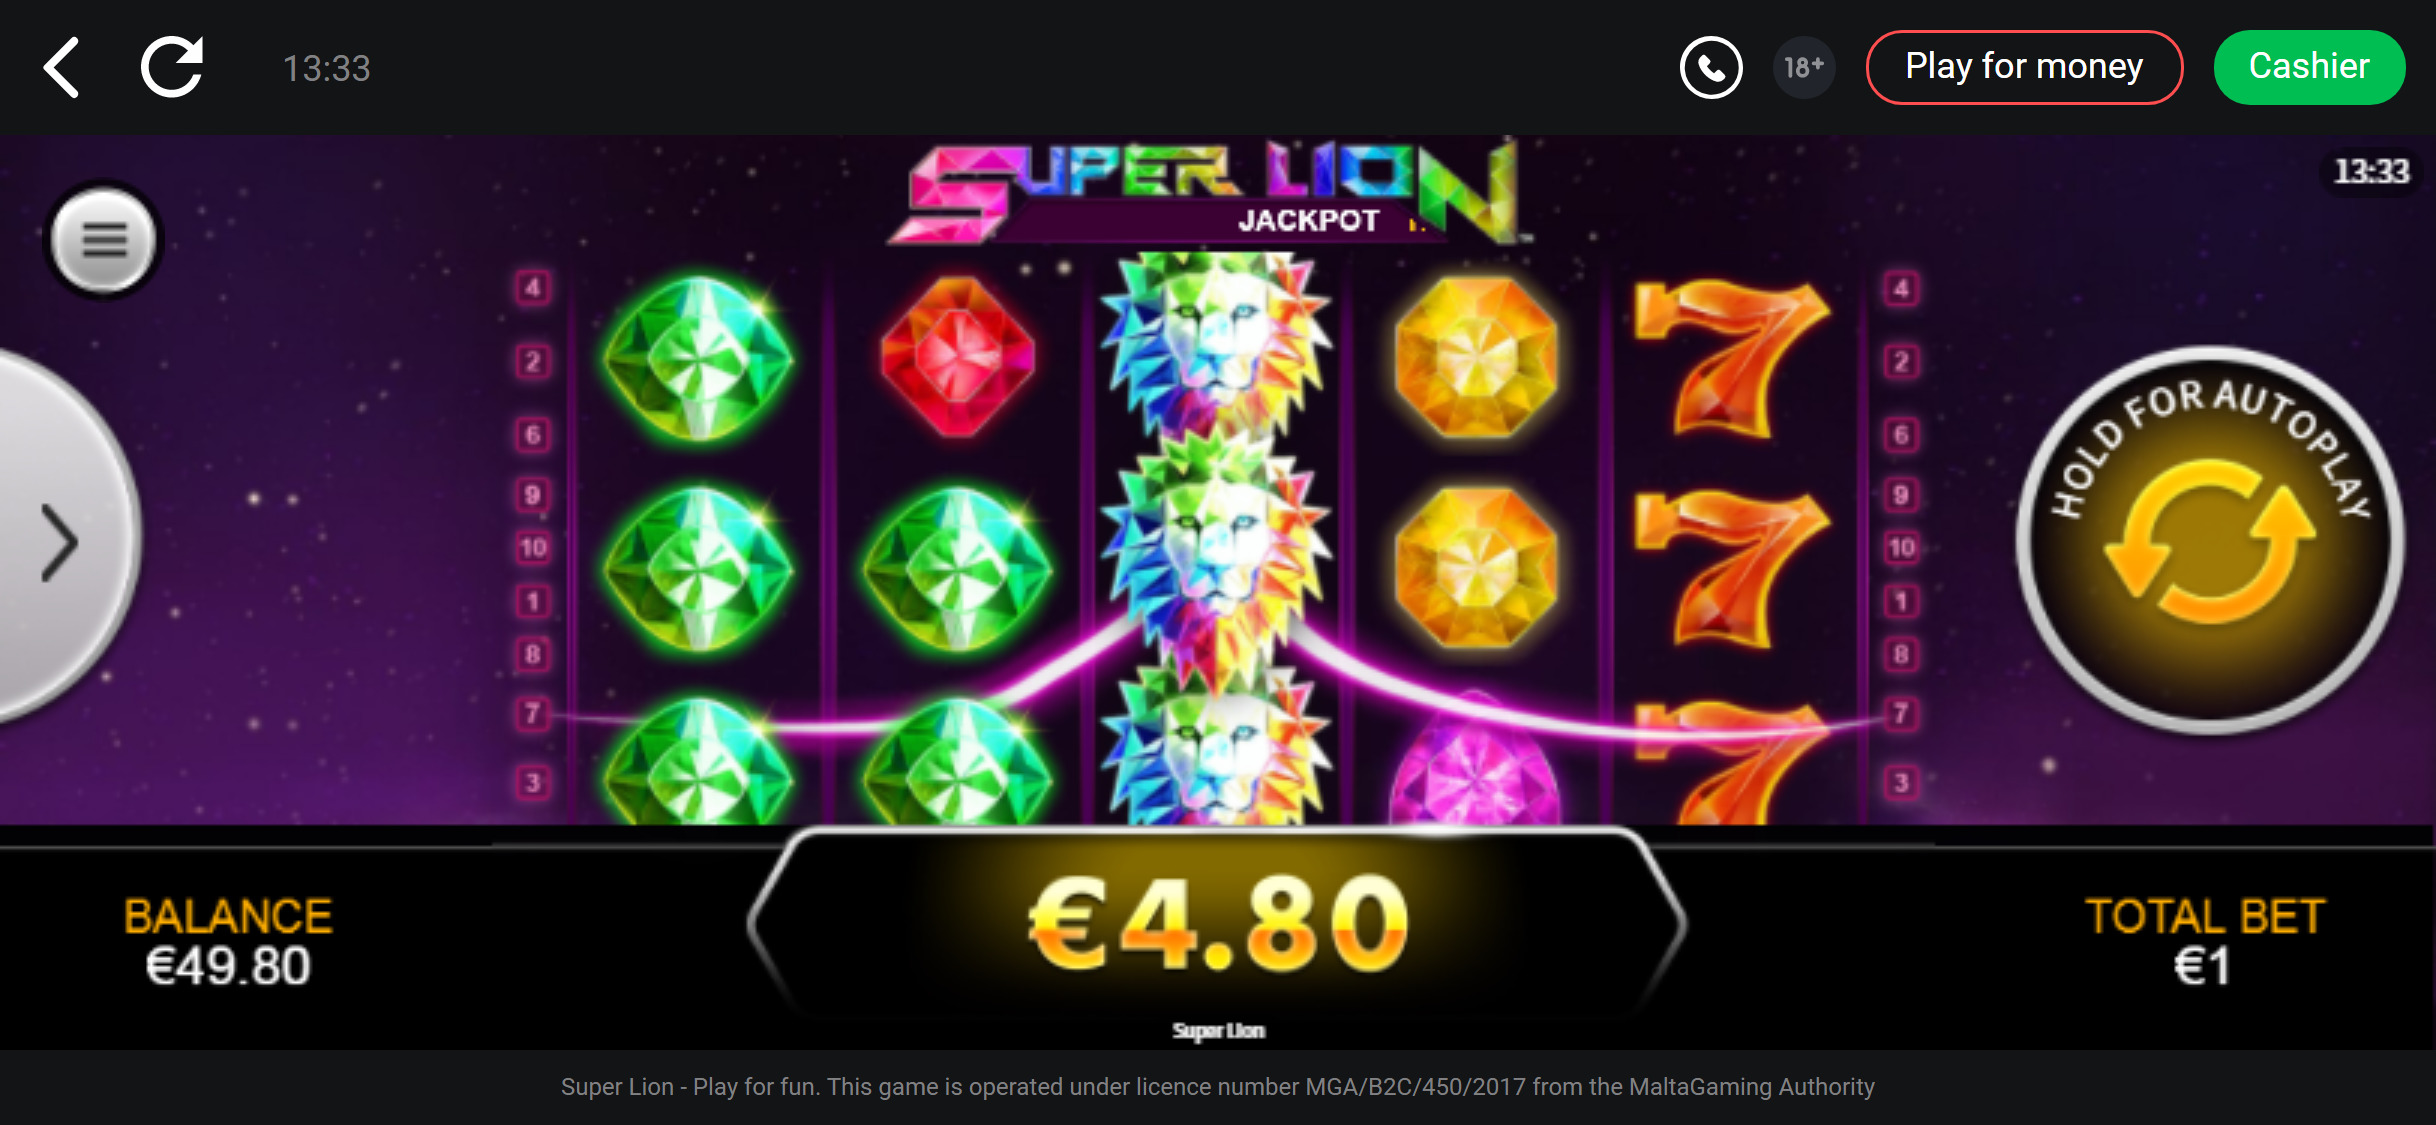 Casino Drift Mobile Slot Games Review